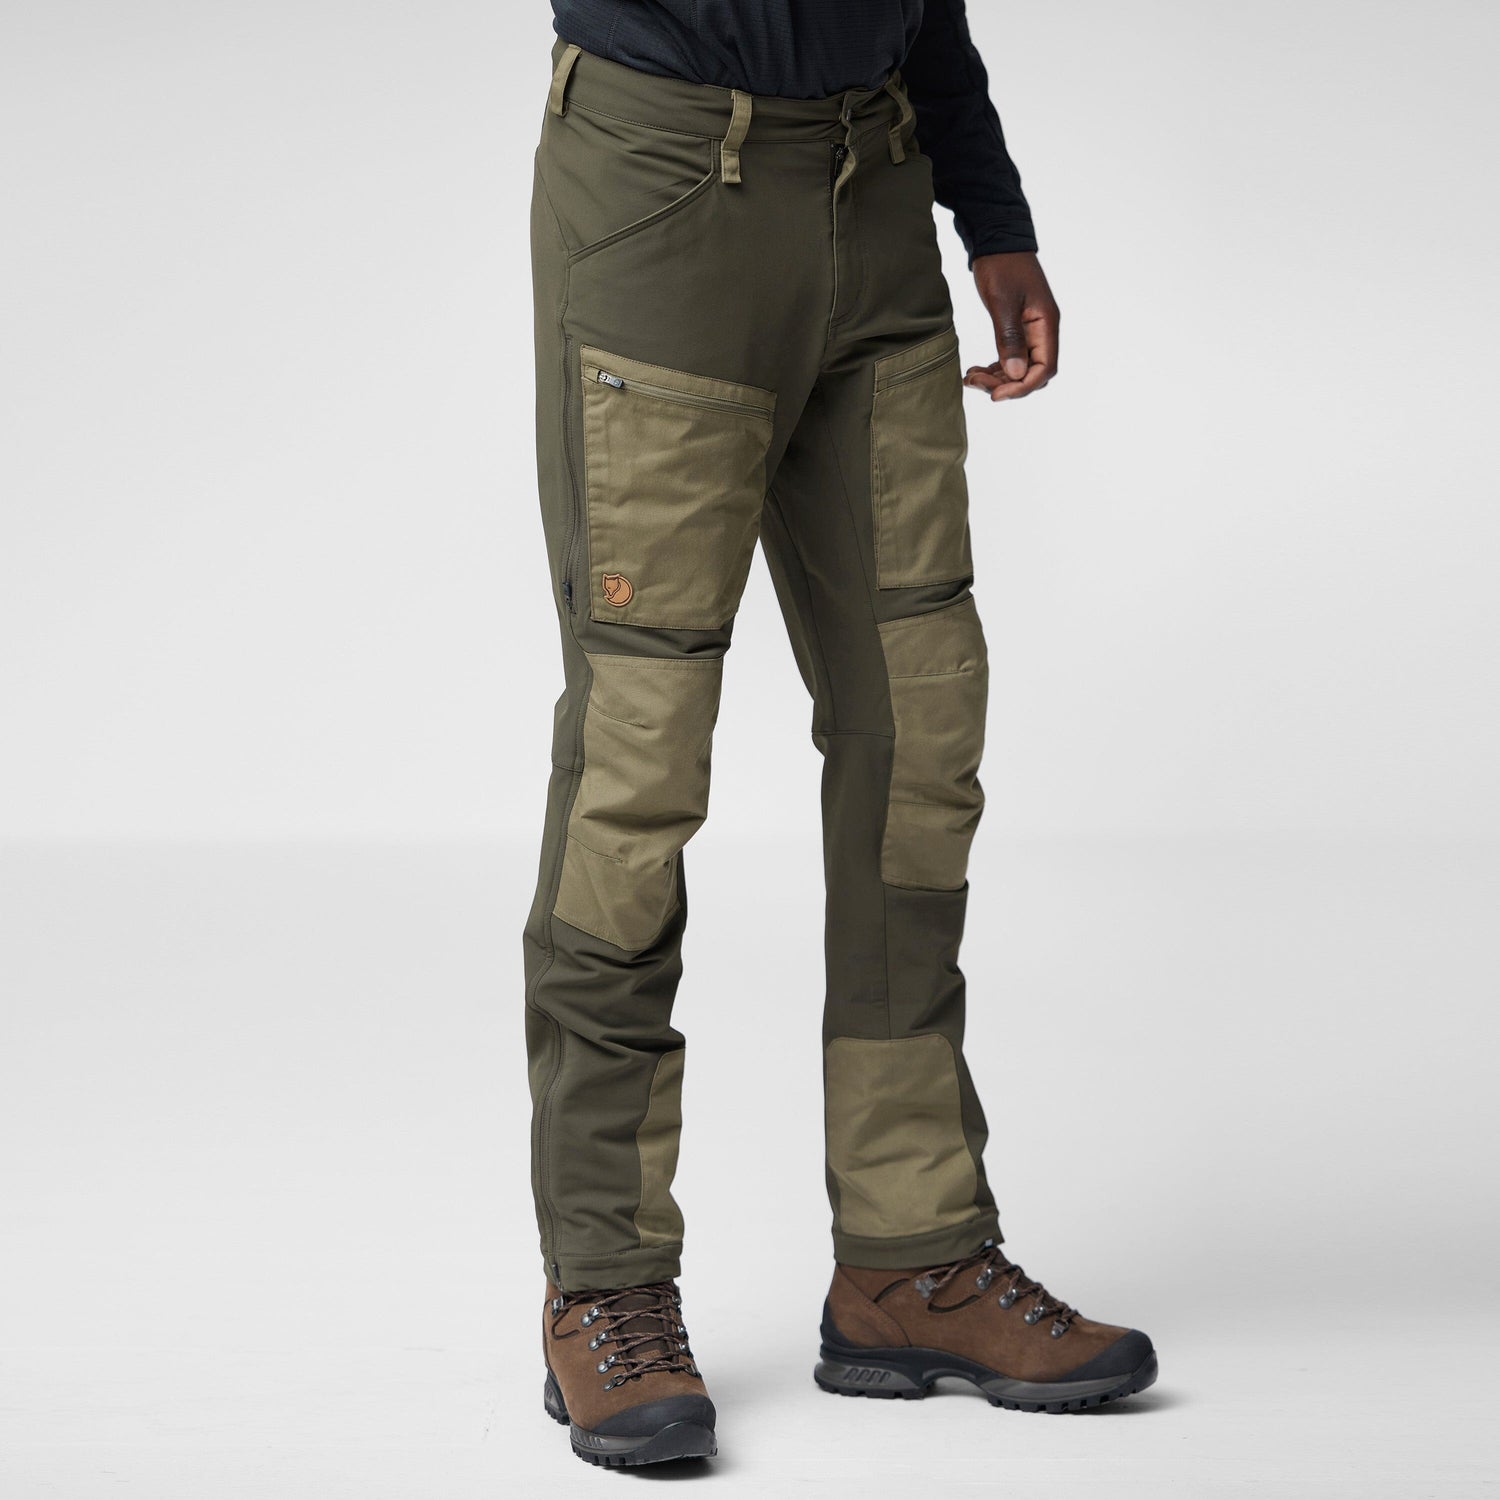 Fjällräven M's Keb Agile Winter Trousers - Recycled Polyester Black-Black S Pants